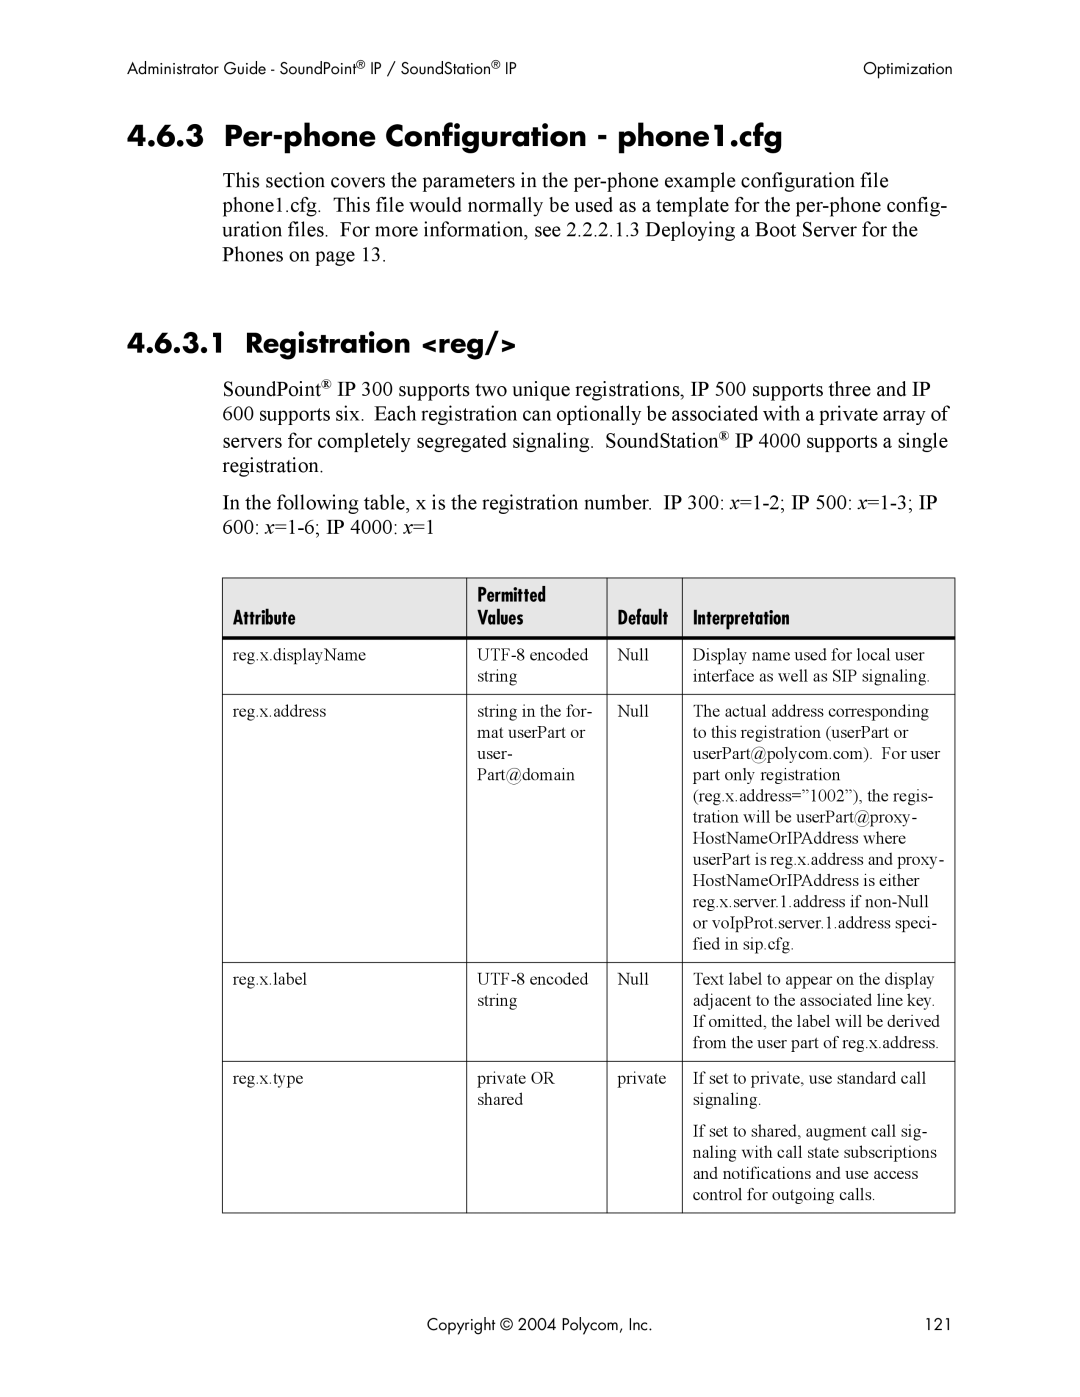 Polycom Version 1.4.x 17 manual Per-phone Configuration phone1.cfg, Registration reg 